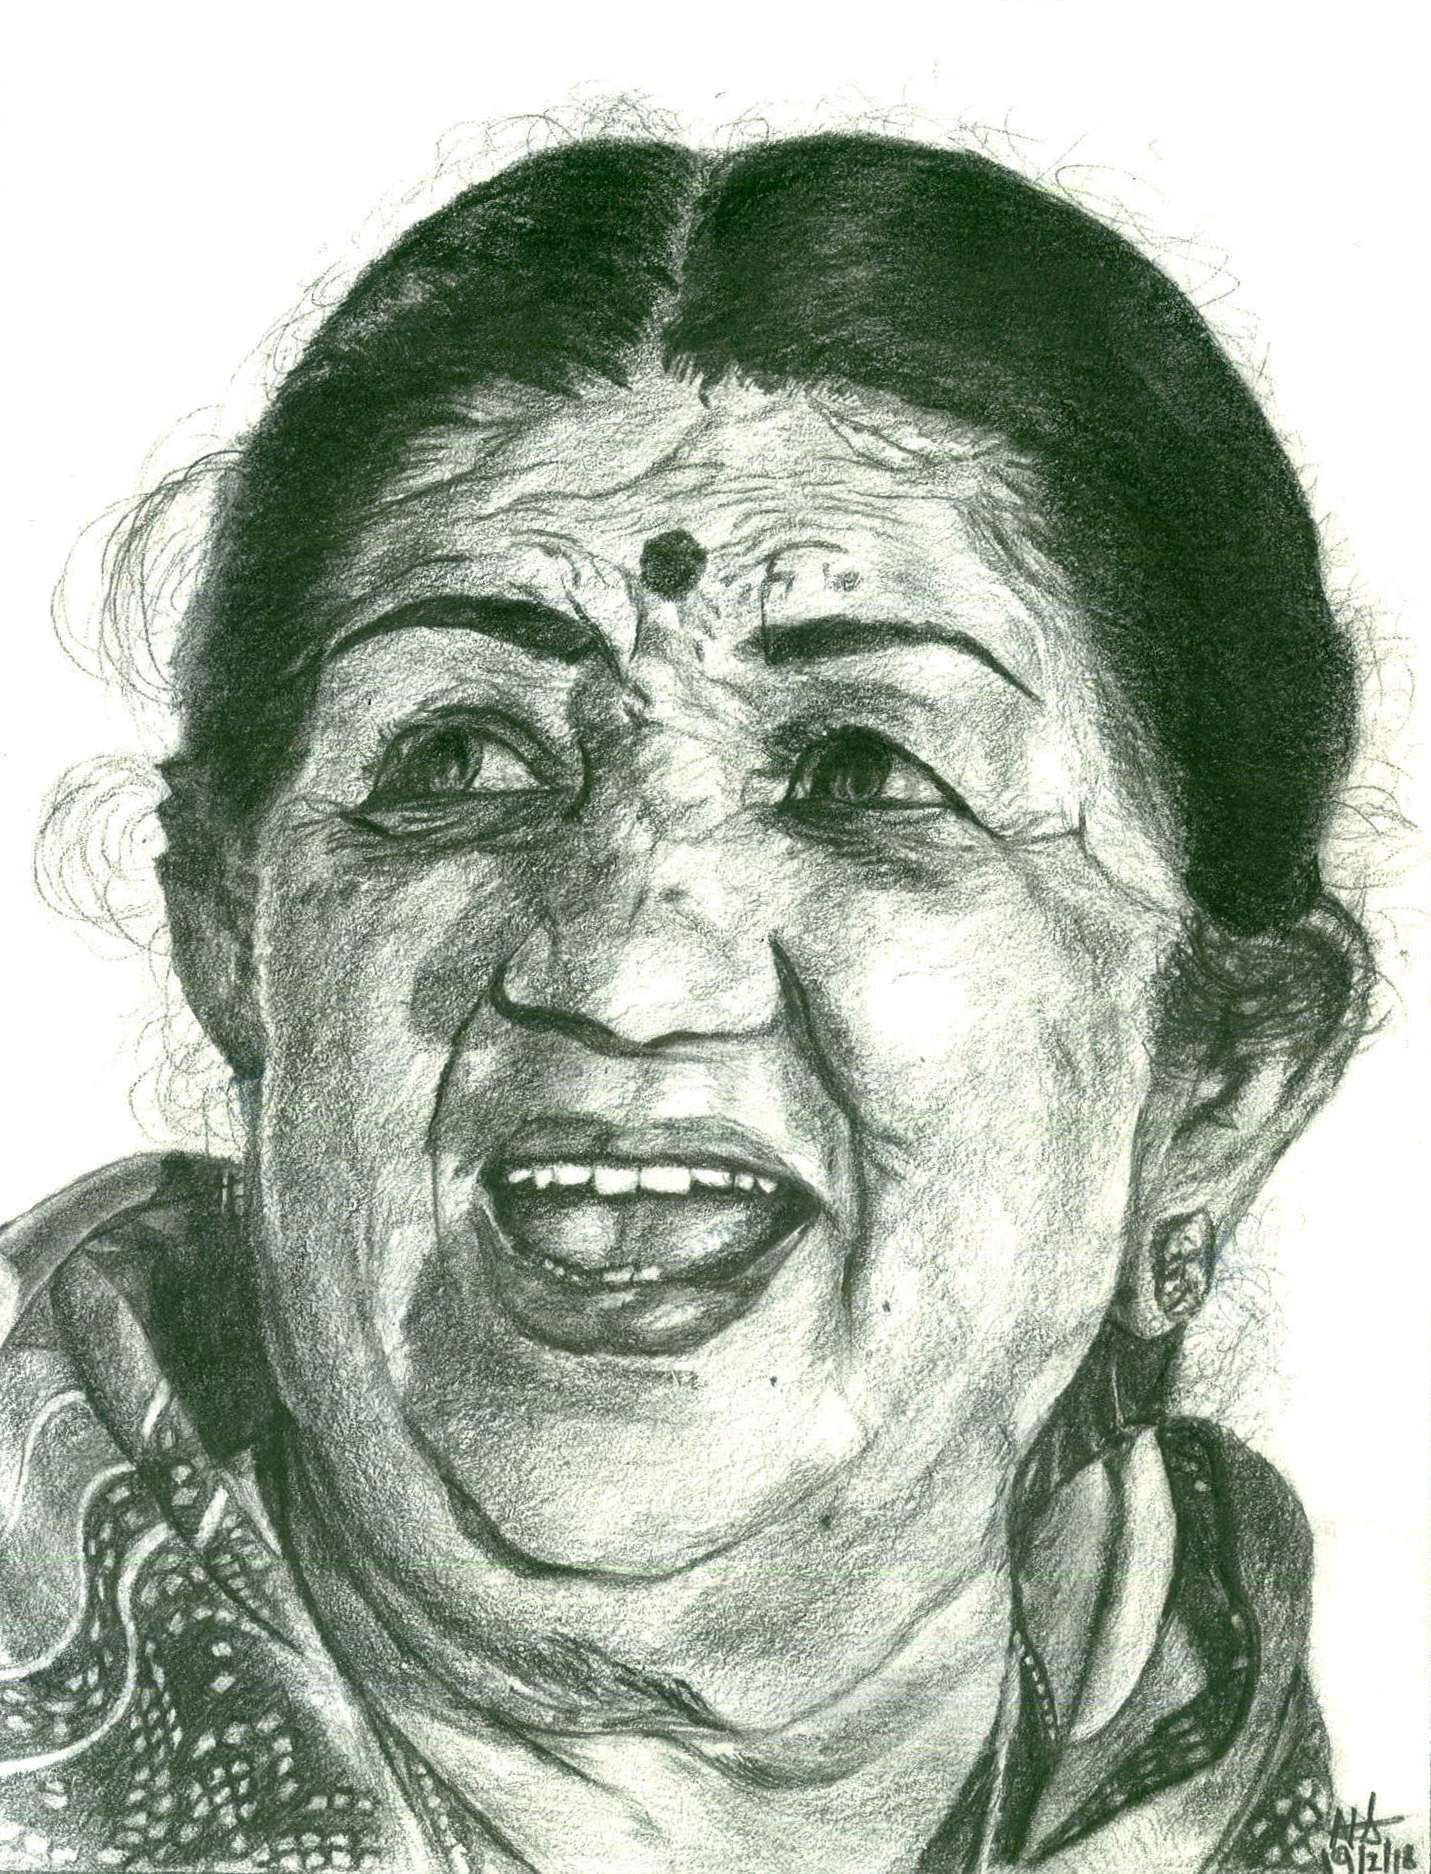 Lata Mangeshkar Sketch / Why do you like pencil sketches? Quora / I